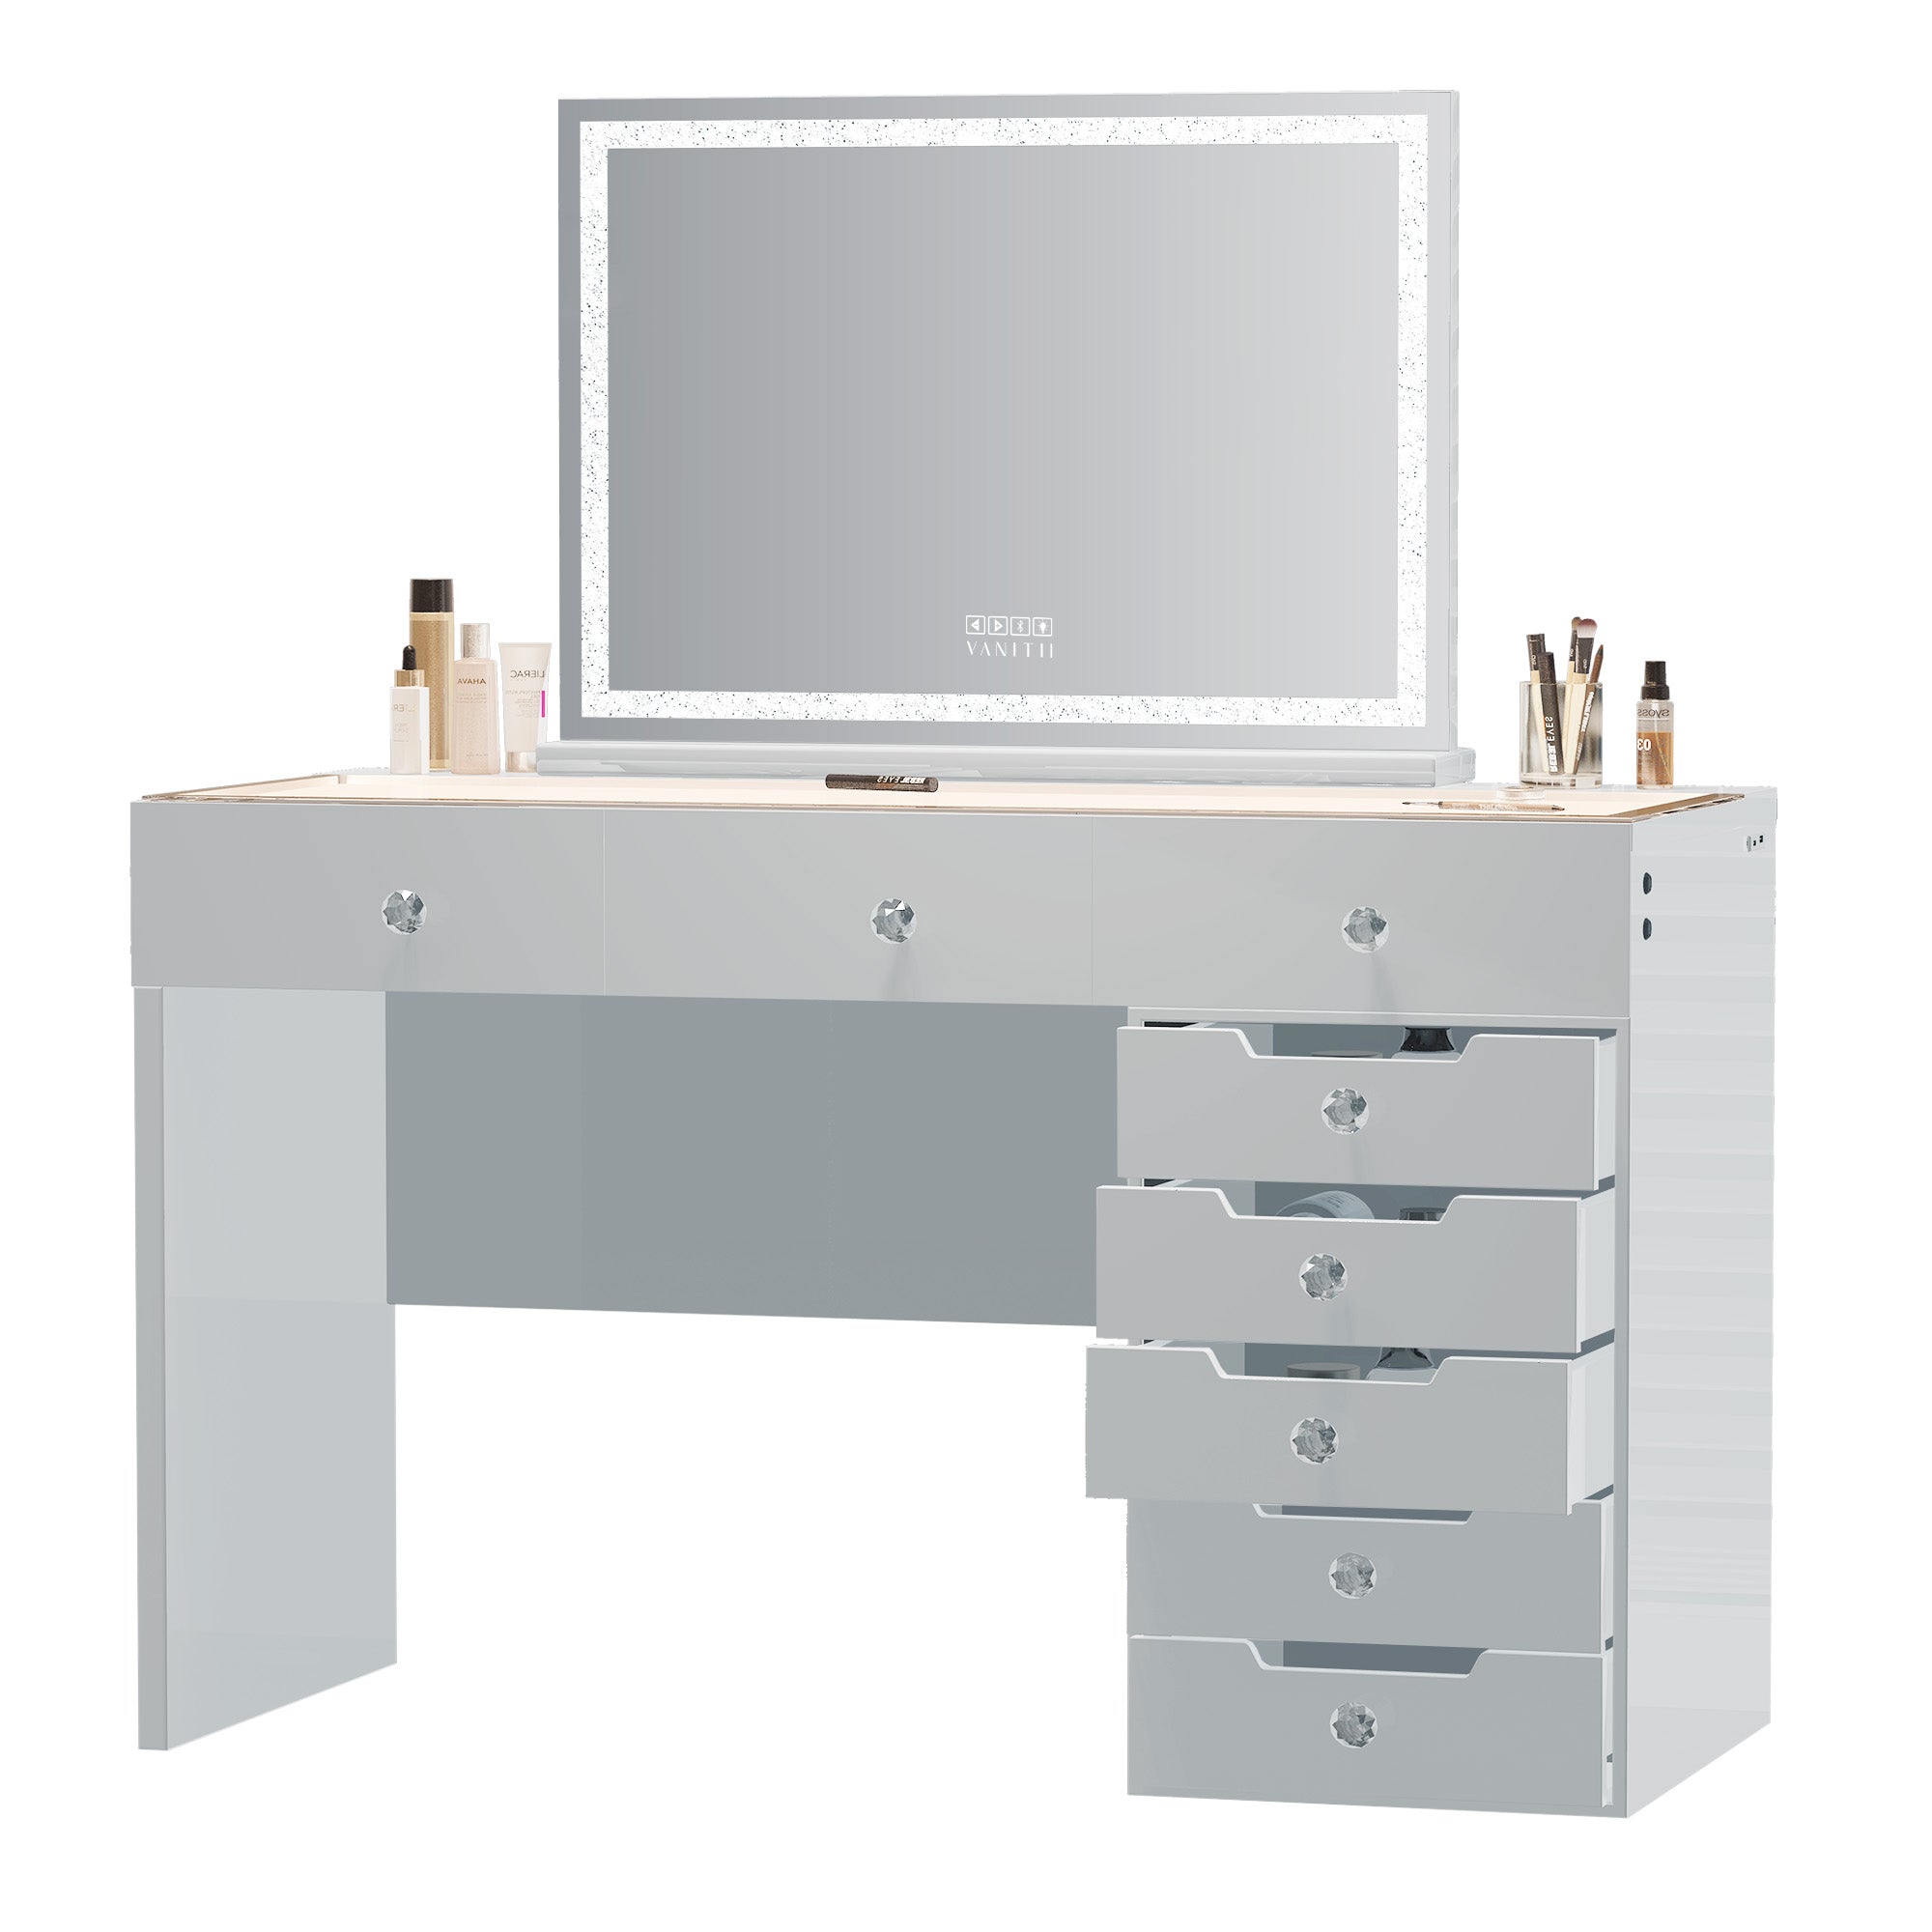 VANITII Diana Vanity Desk - 8 Storage Drawers